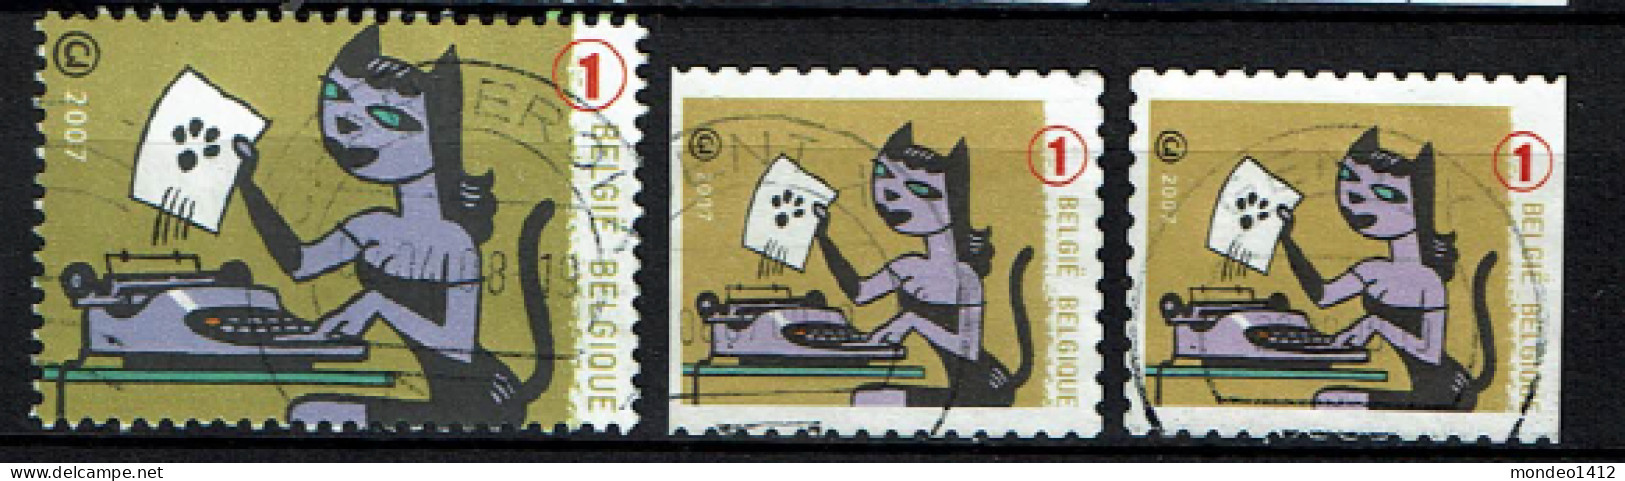 België OBP 3713,3717 - Schrijfmachines, Les Machines à écrire, Typewriters - Olivetti - Usados